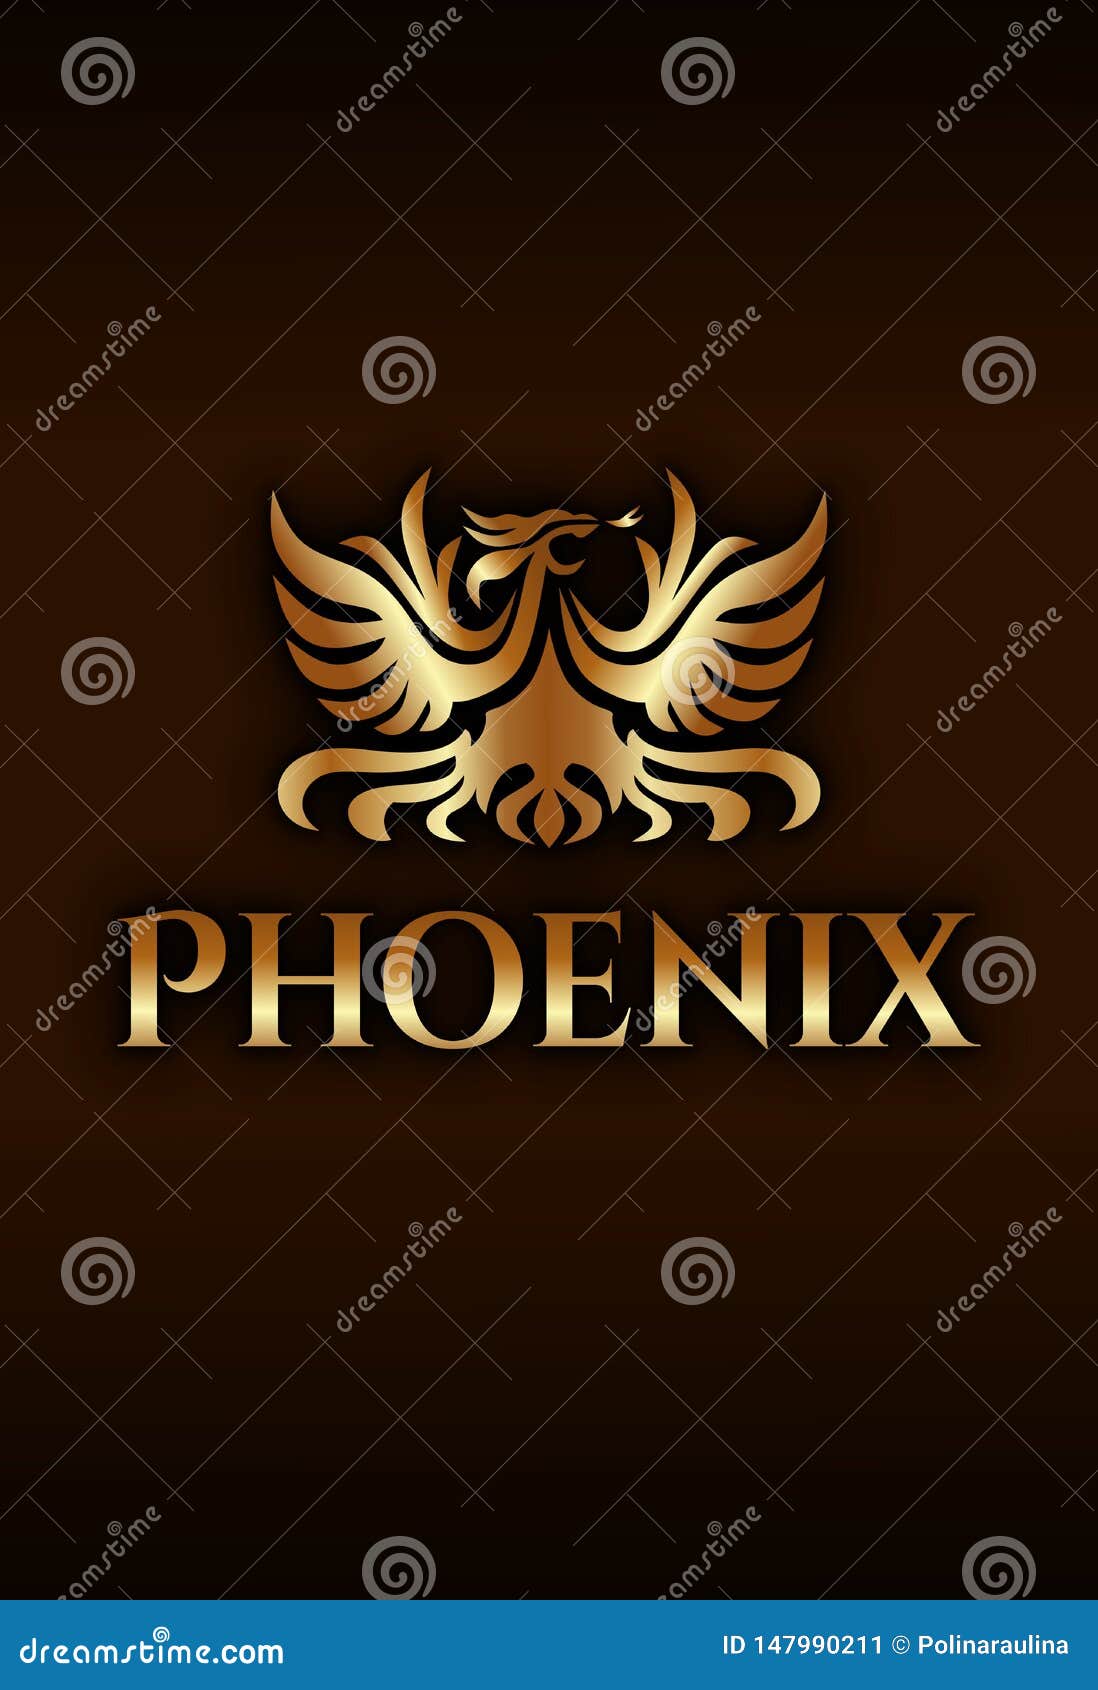 Phoenix Luxury Vector Golden Logo On Dark Brown Background Stock Image Illustration Of Decal Elegant